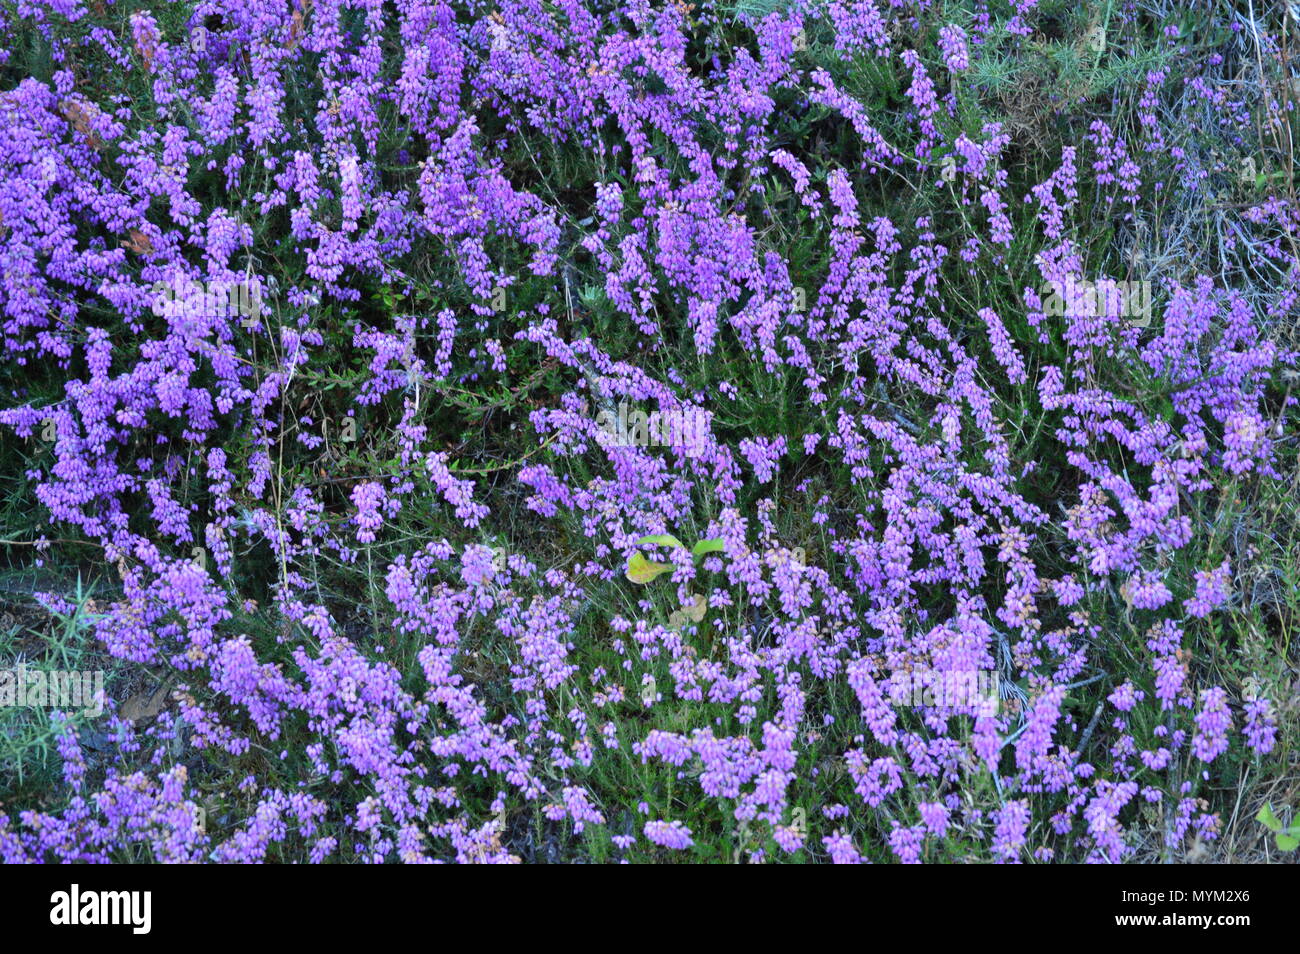 Malva Flowers In Rebedul Meadows In Lugo. Flowers Landscapes Nature. August 18, 2016. Rebedul Becerrea Lugo Galicia Spain. Stock Photo